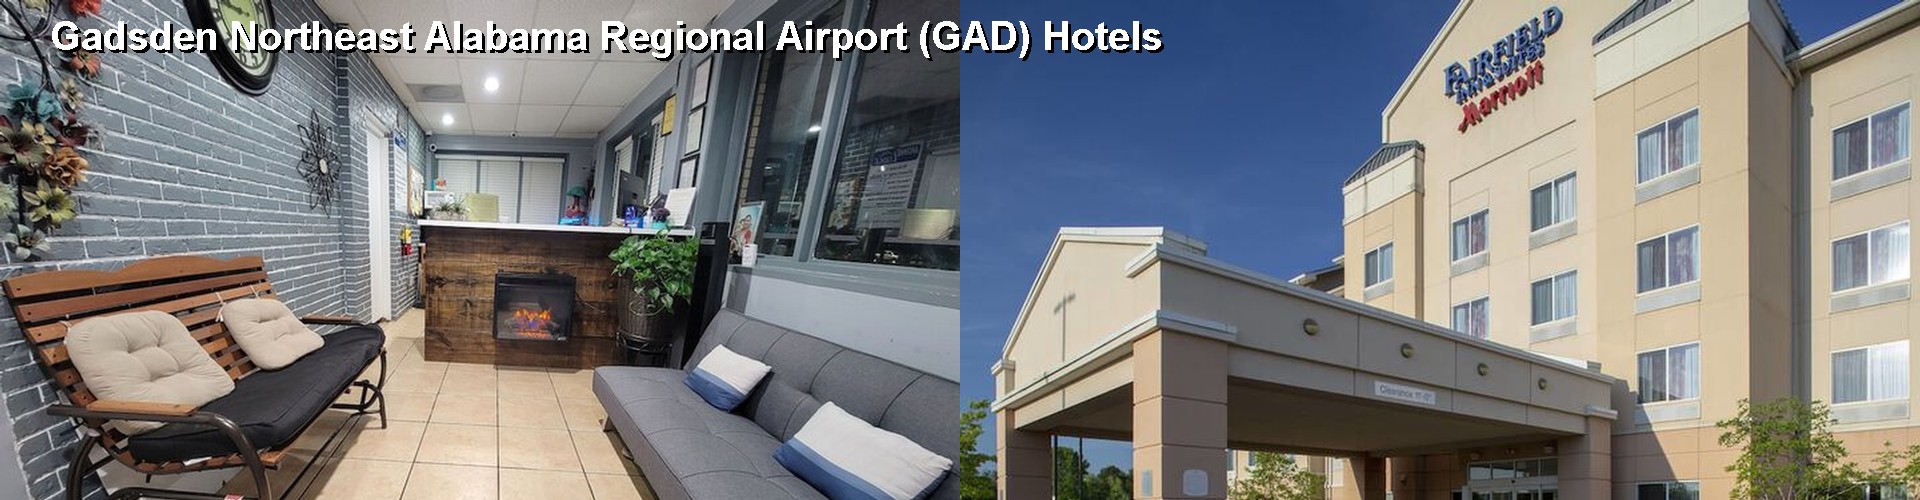 4 Best Hotels near Gadsden Northeast Alabama Regional Airport (GAD)